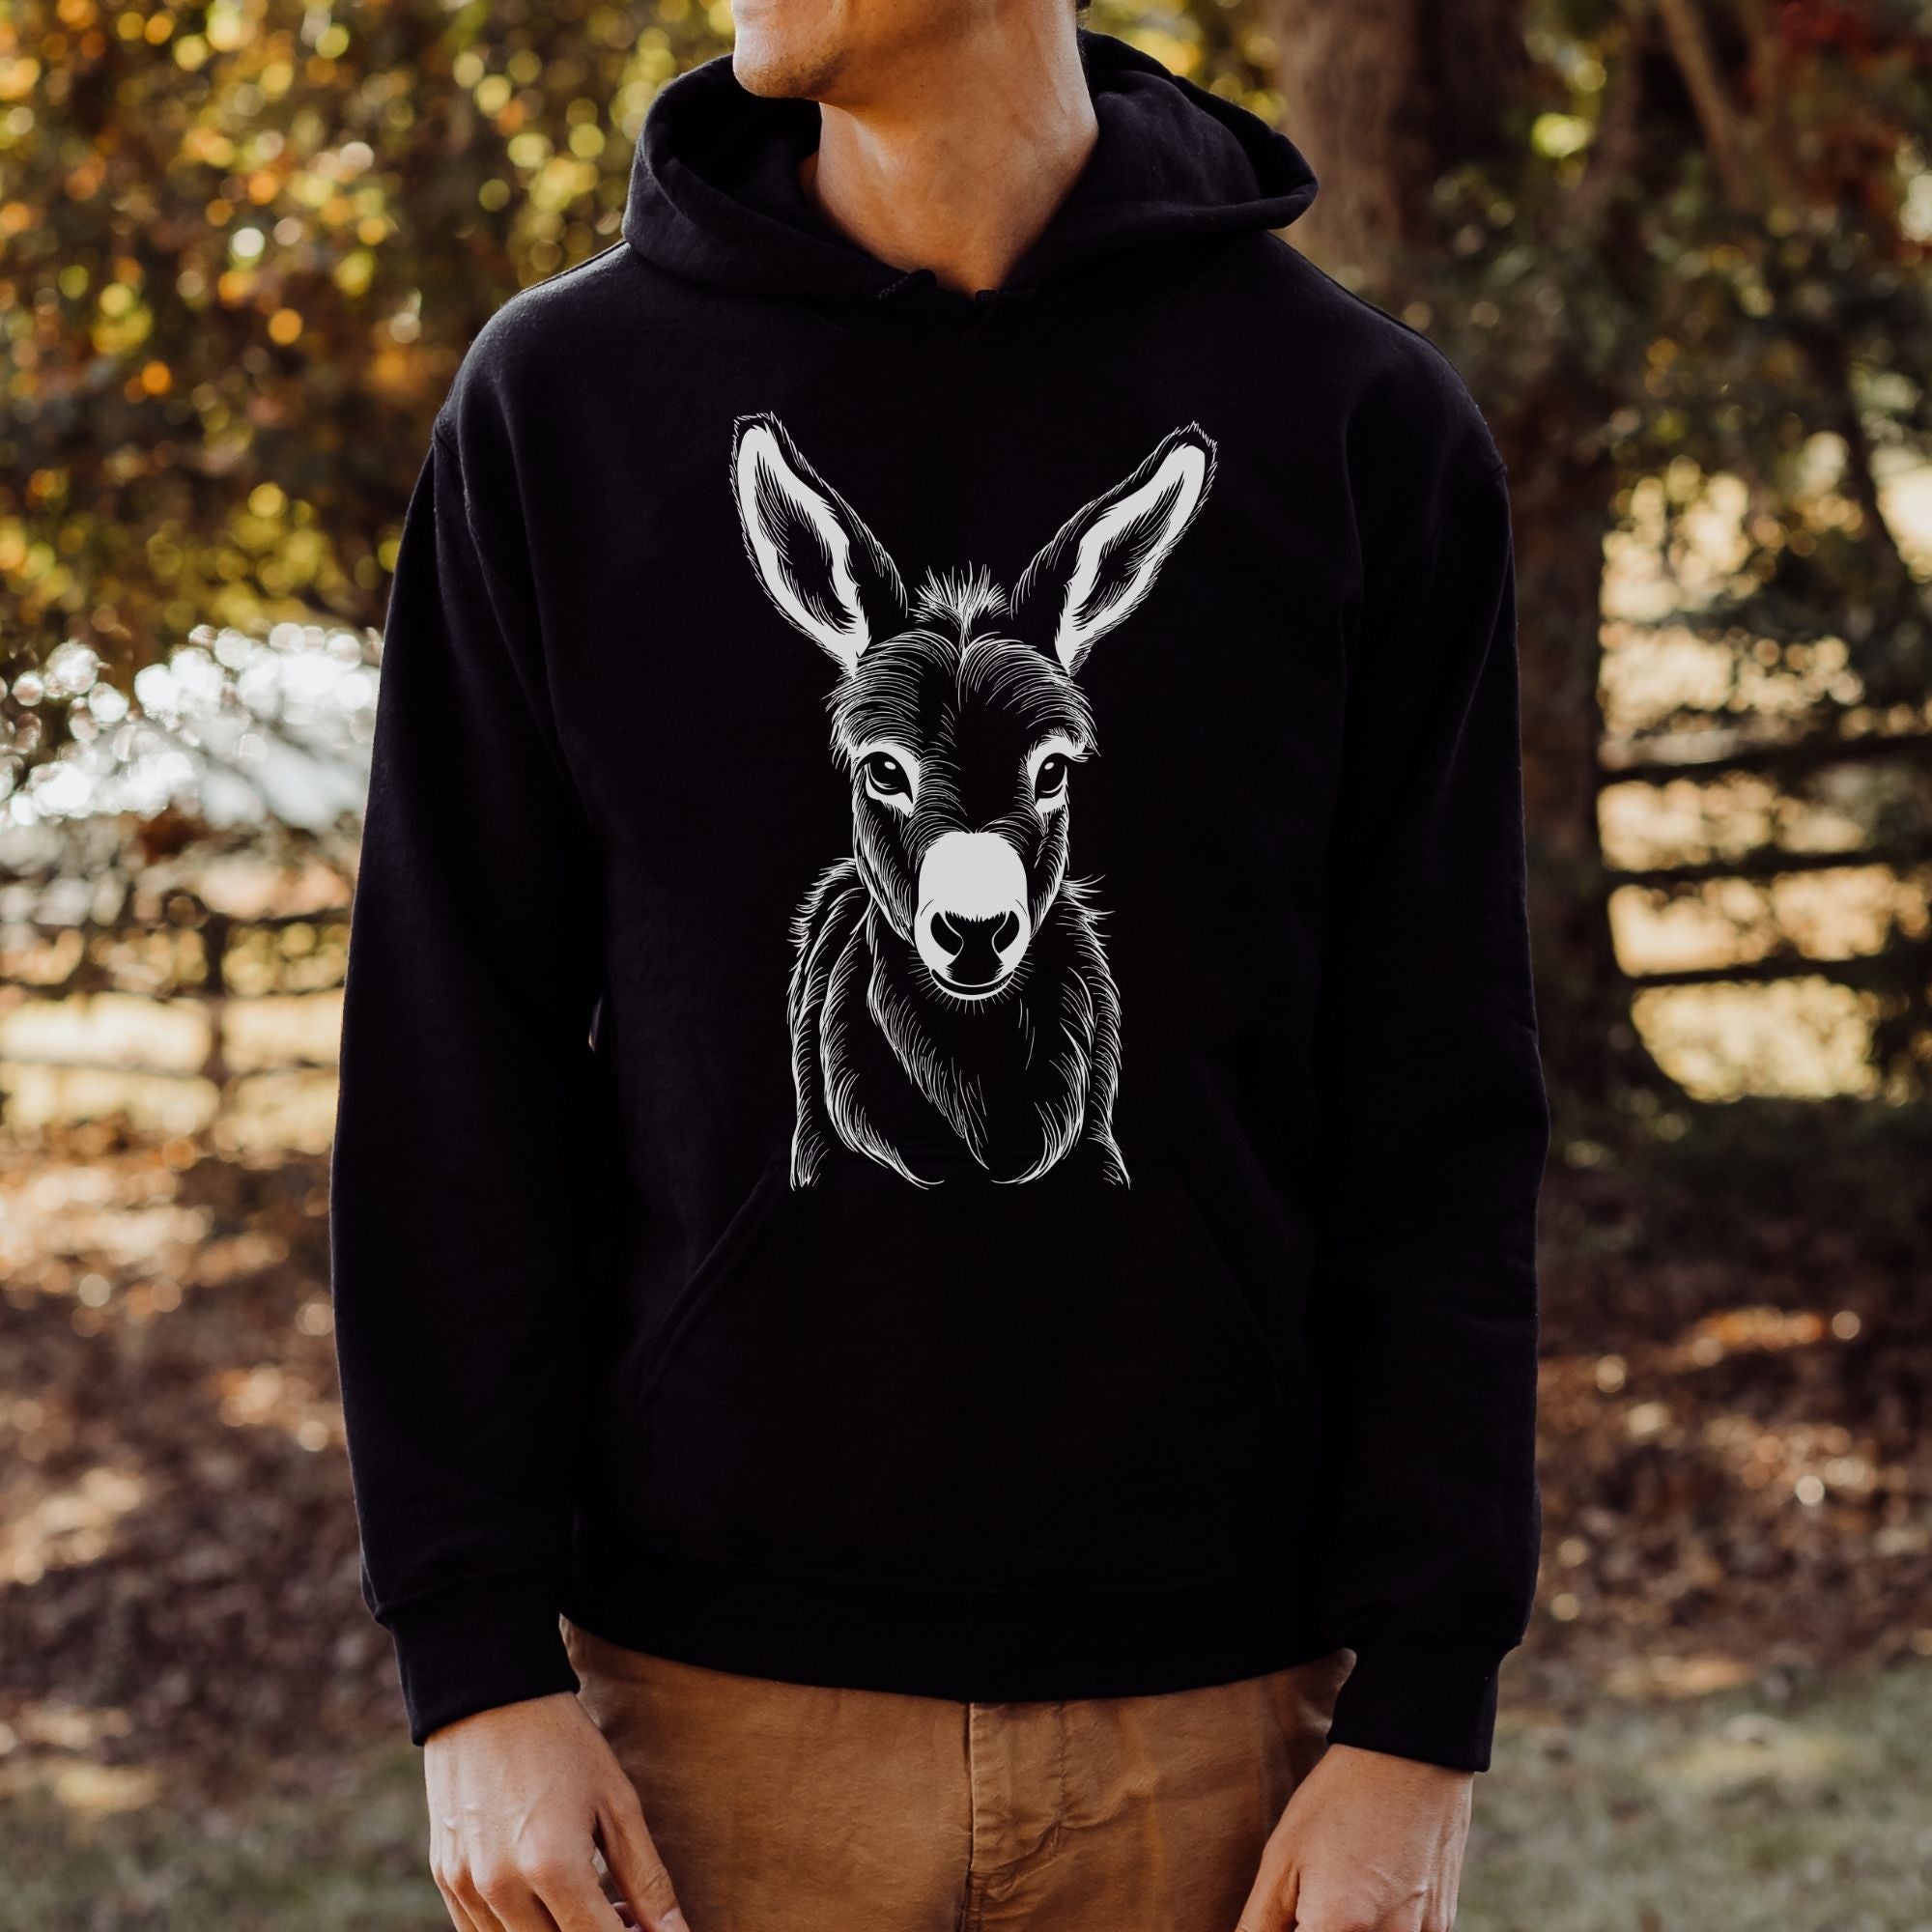 Cute Donkey Sweatshirt - Super Soft Gildan Hoodie or Crewneck *UNISEX FIT*-Sweatshirts-208 Tees Wholesale, Idaho